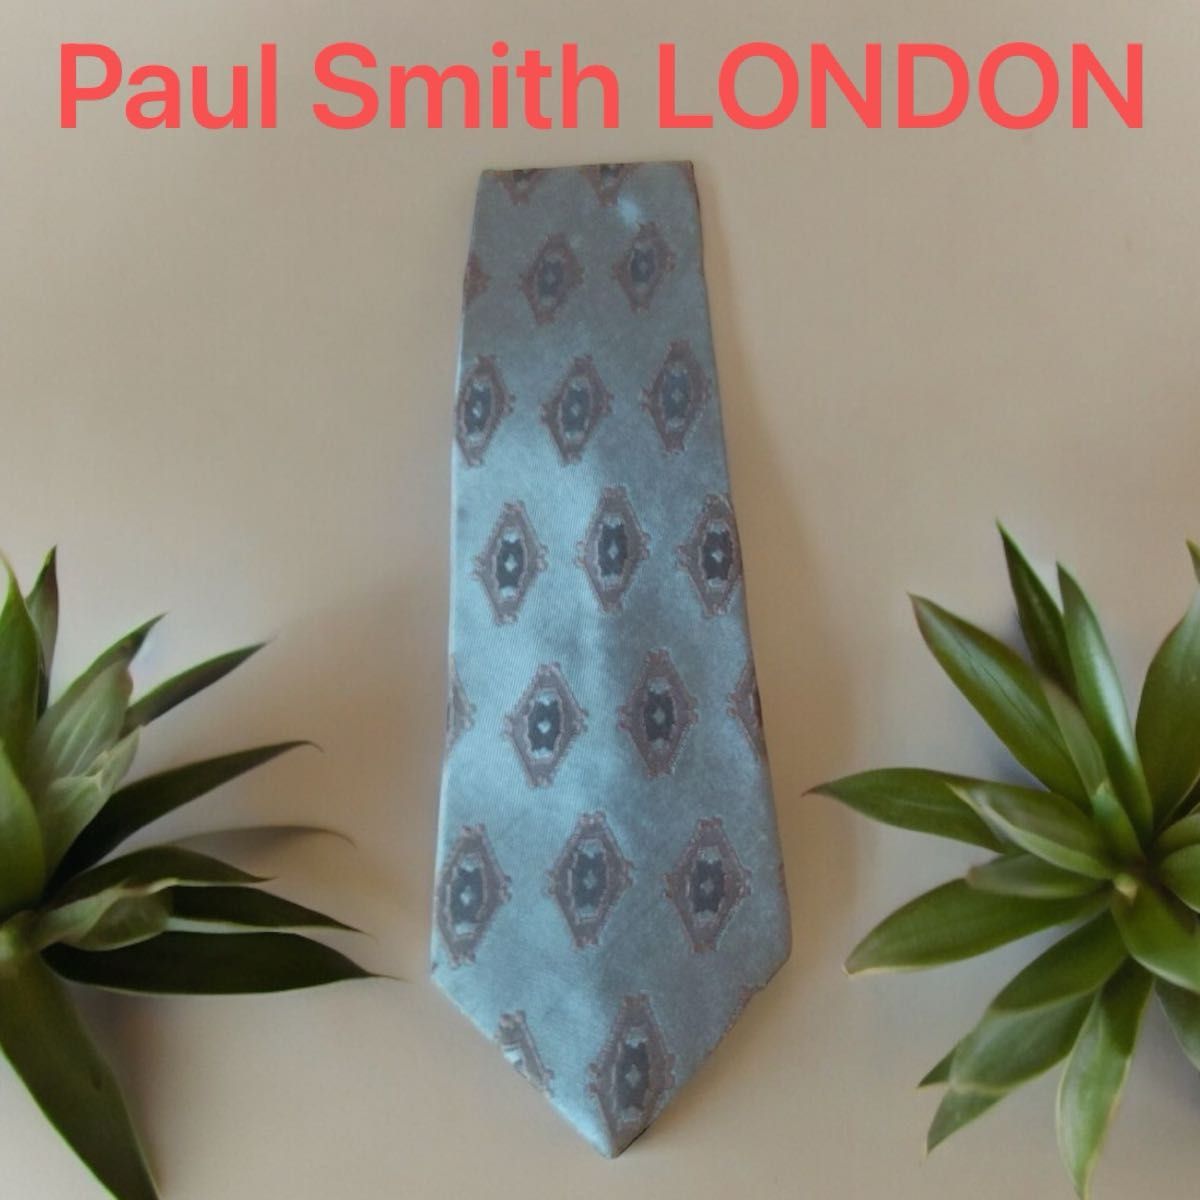 『Paul Smith LONDON』 ポールスミス ロンドン 小紋柄ネクタイ